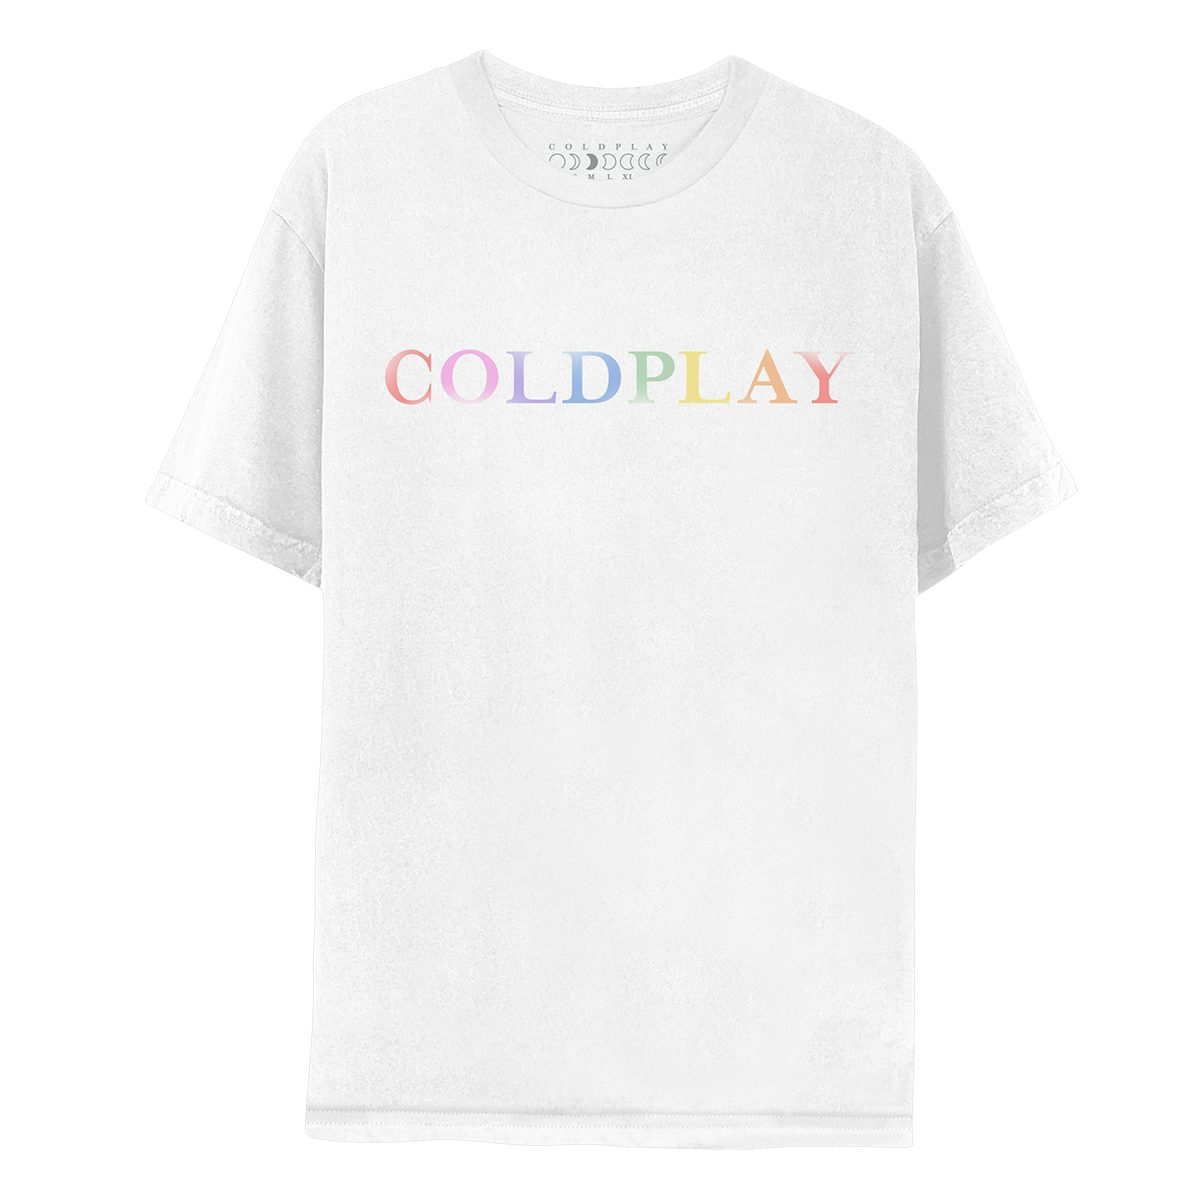 coldplay merchandise india